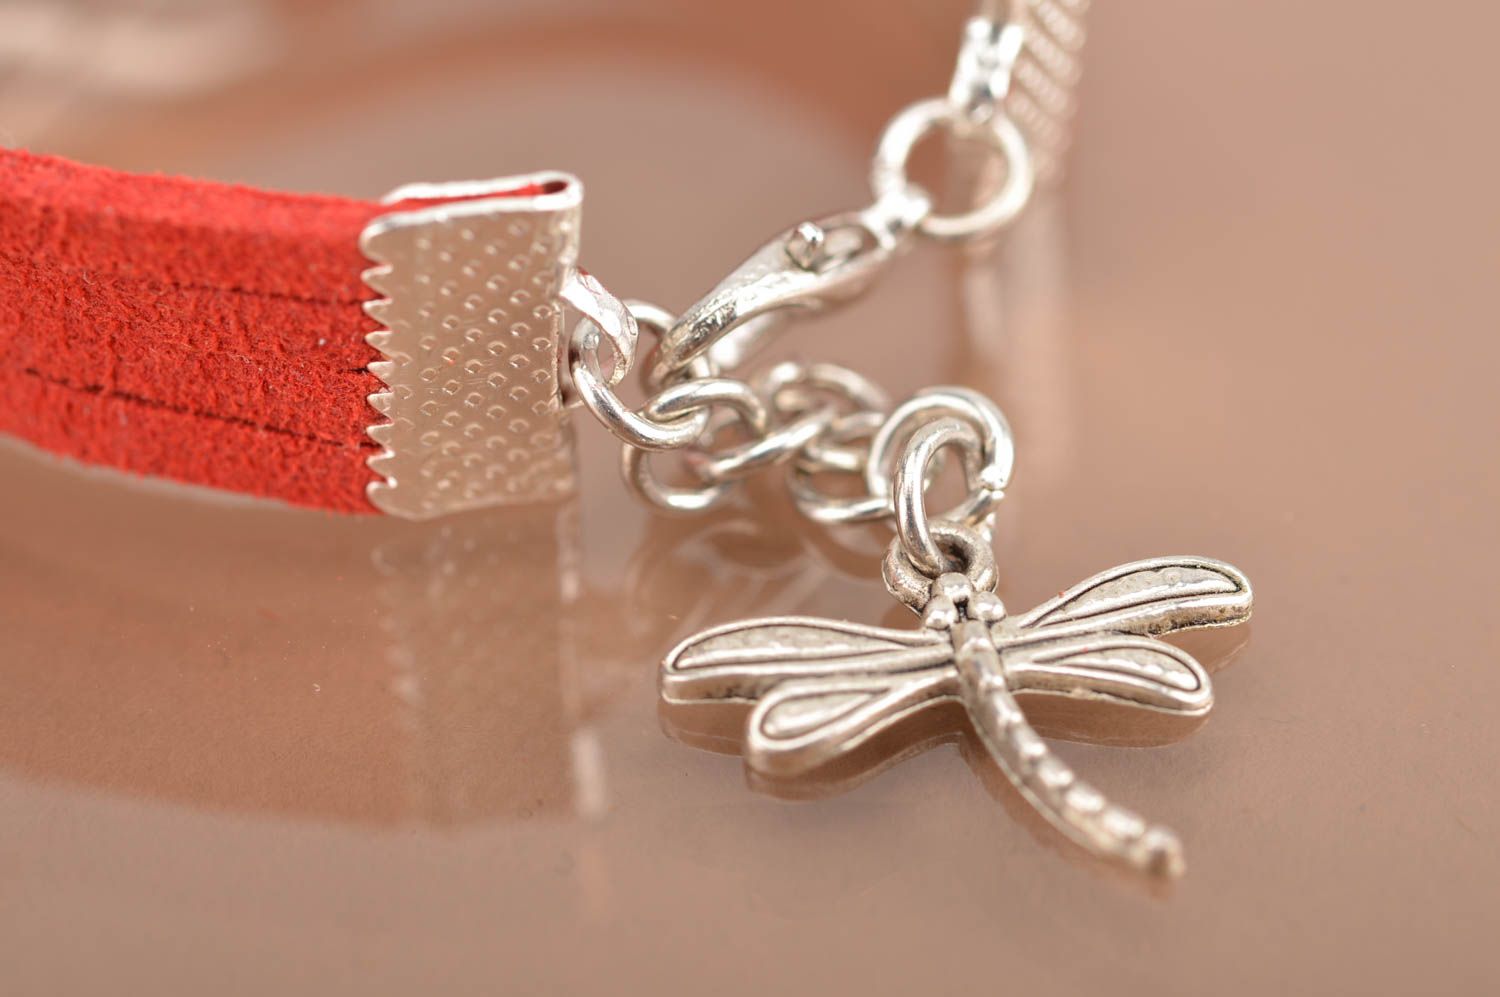 Stylish handmade suede cord bracelet charm bracelet designs leather jewelry photo 4